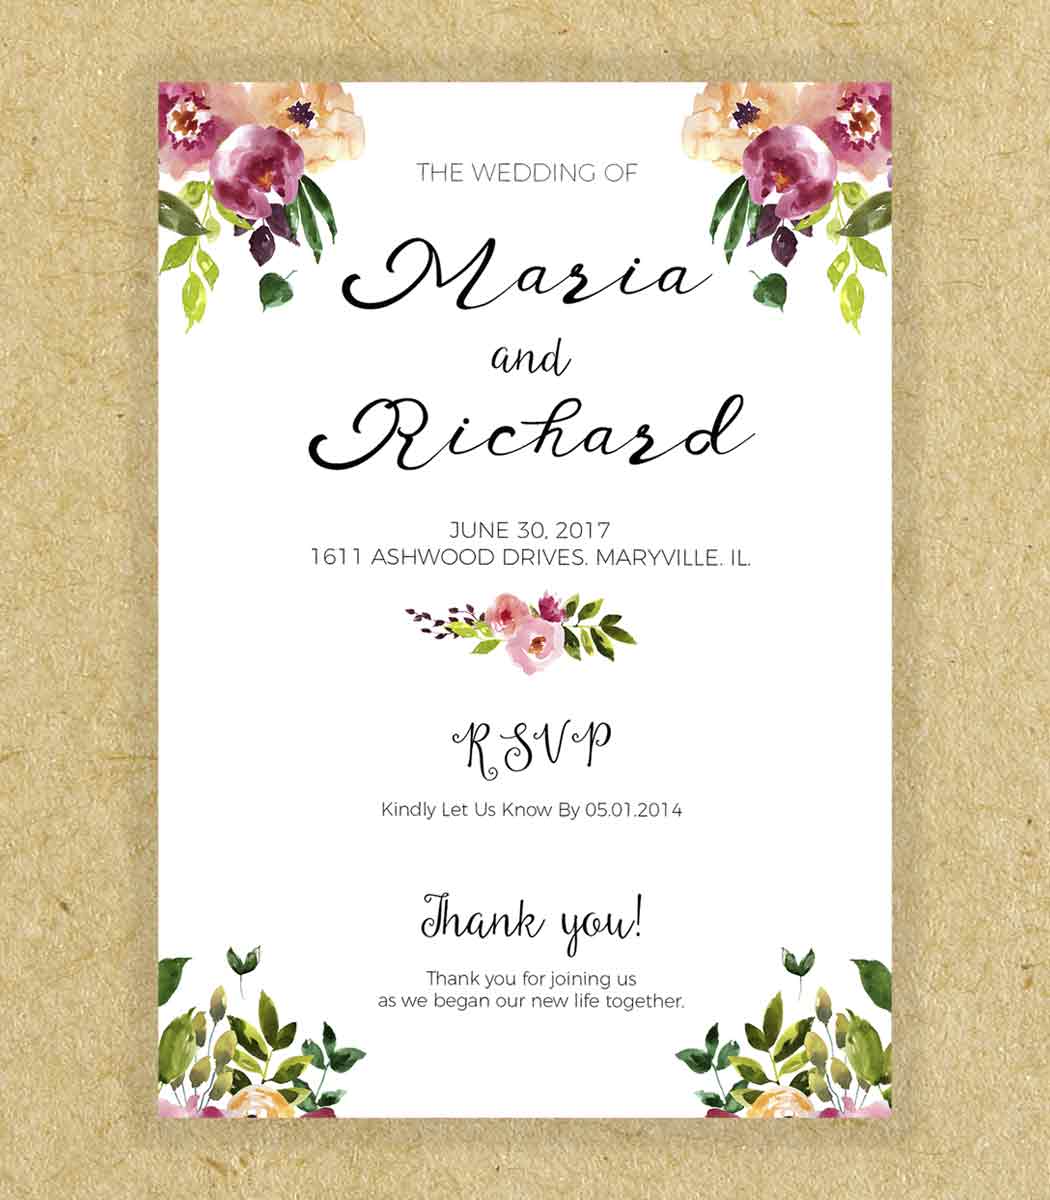 Wedding Cards New Designs Personal Invitation 